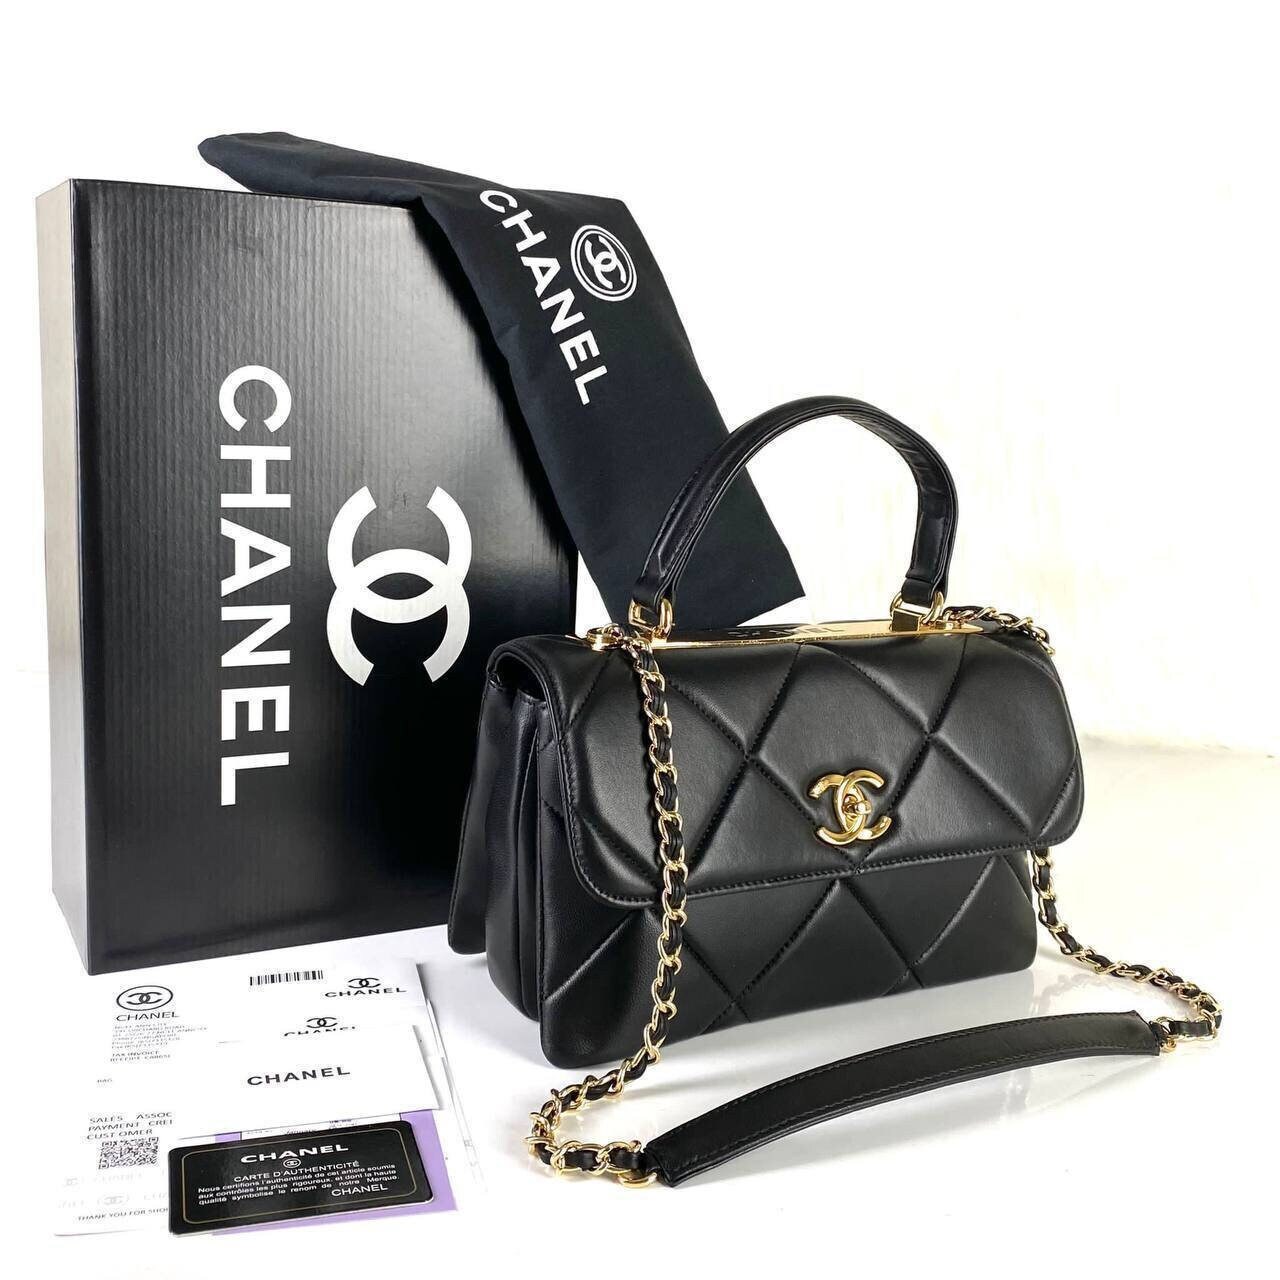 Buy Mini Chanel Online In India -  India